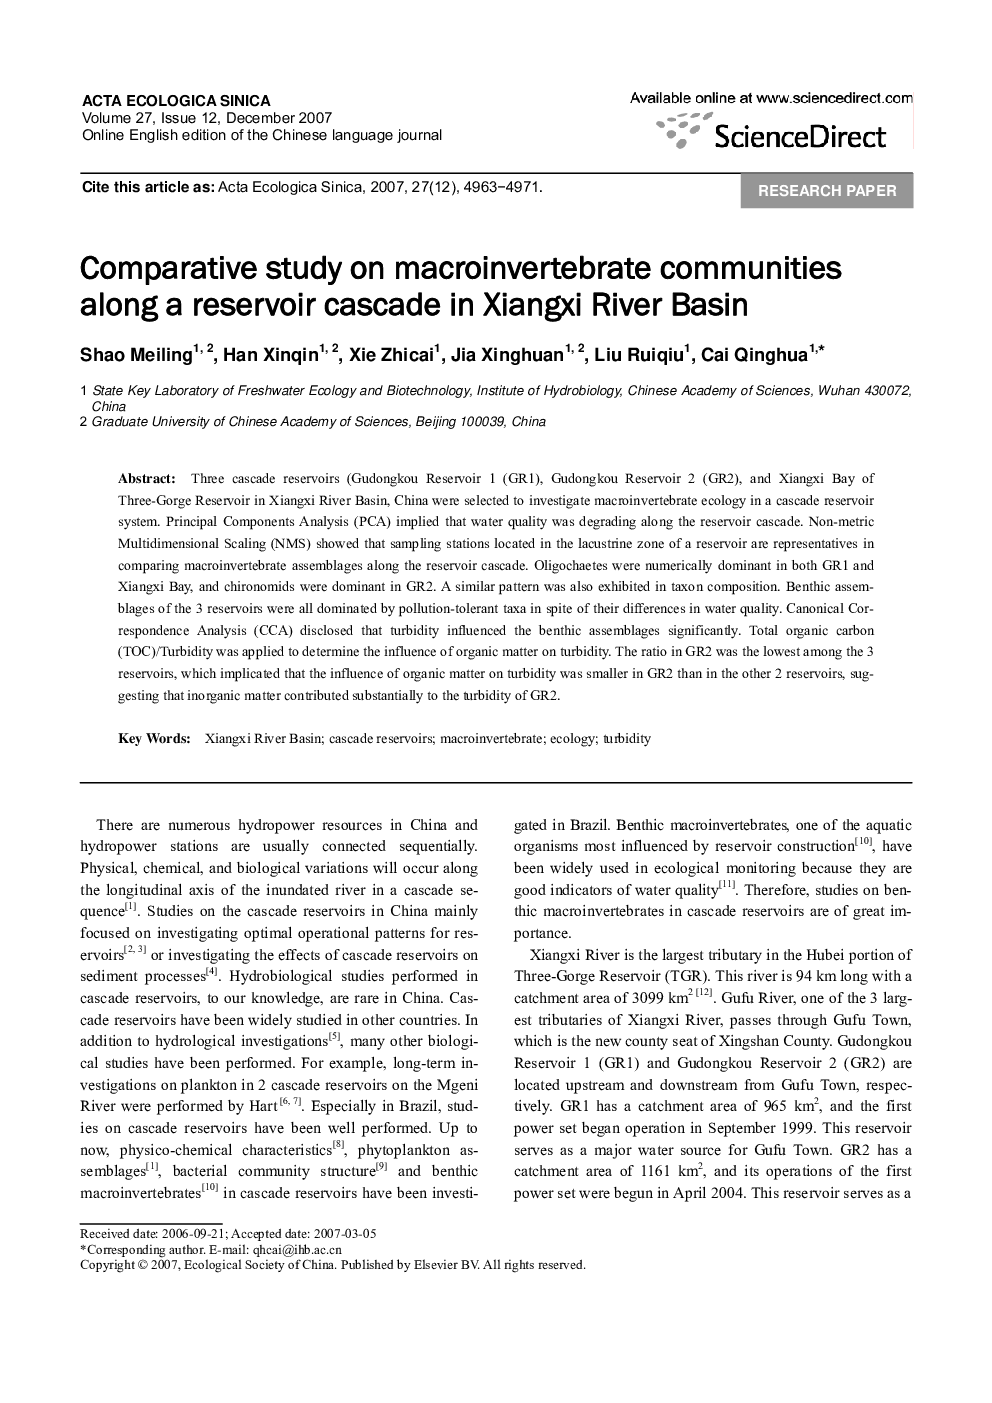 Comparative study on macroinvertebrate communities along a reservoir cascade in Xiangxi River Basin